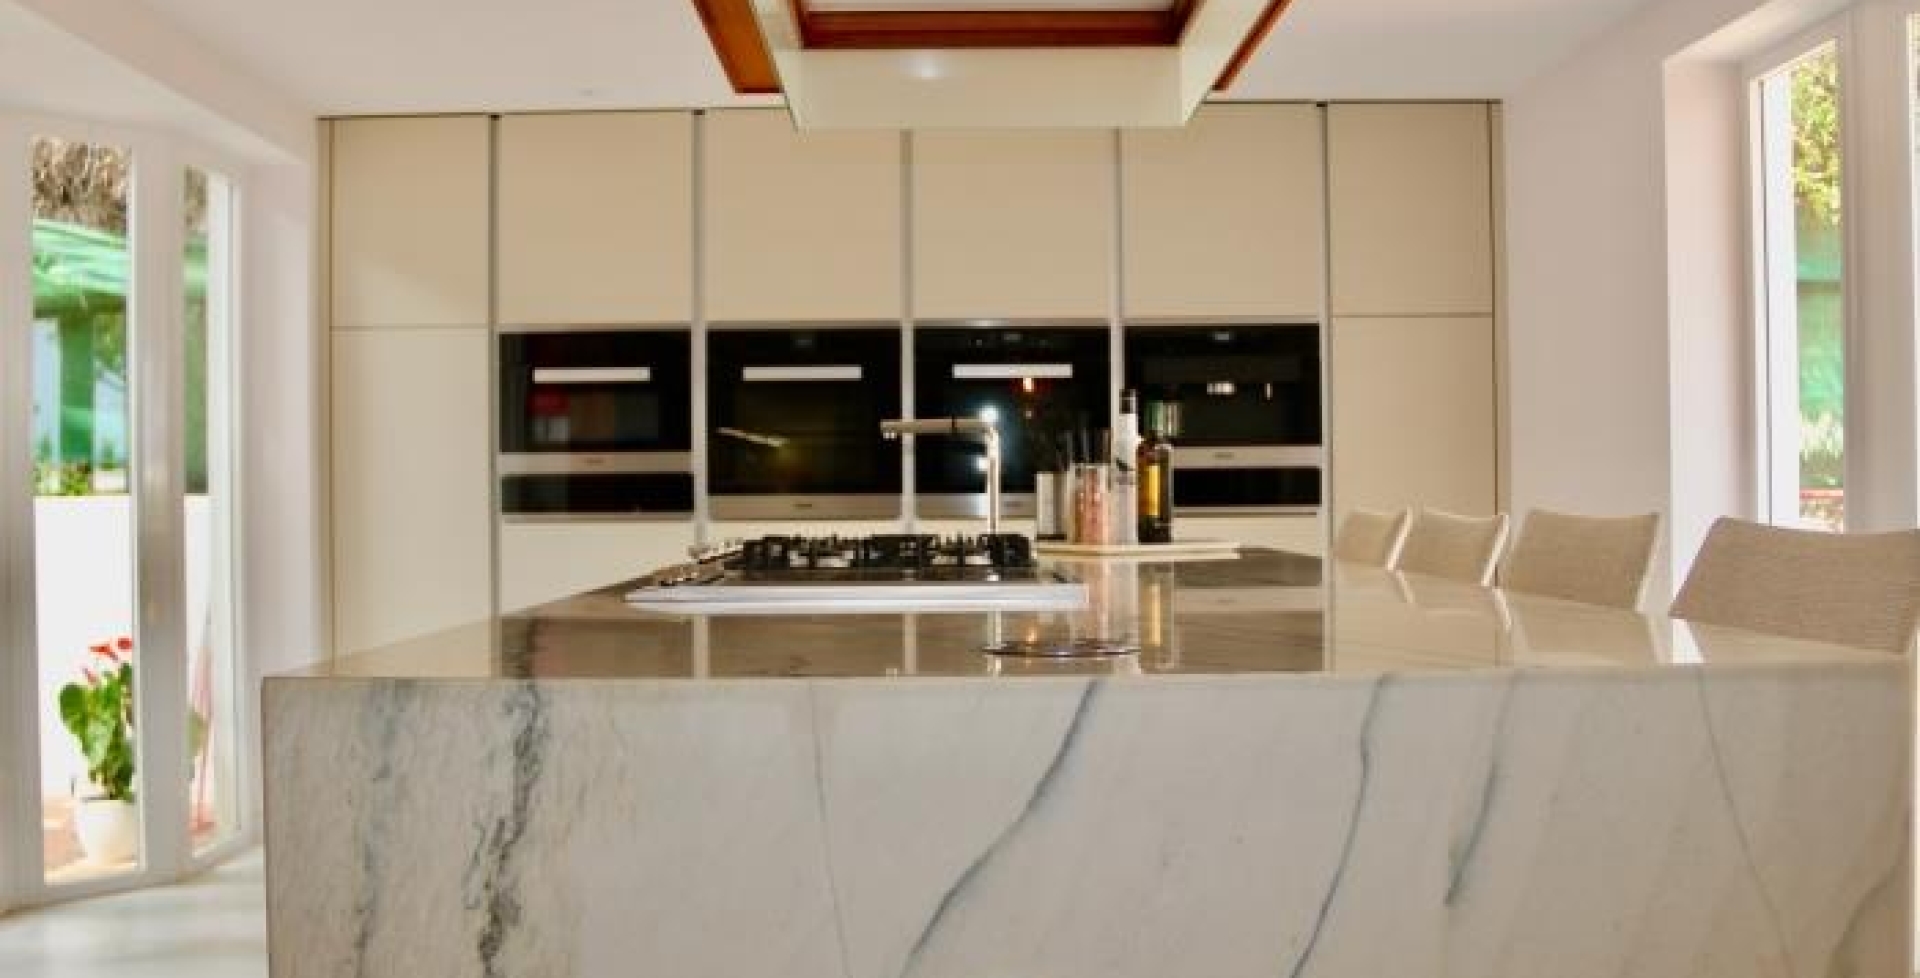 Villa Chapas 4 bedroom – kitchen2